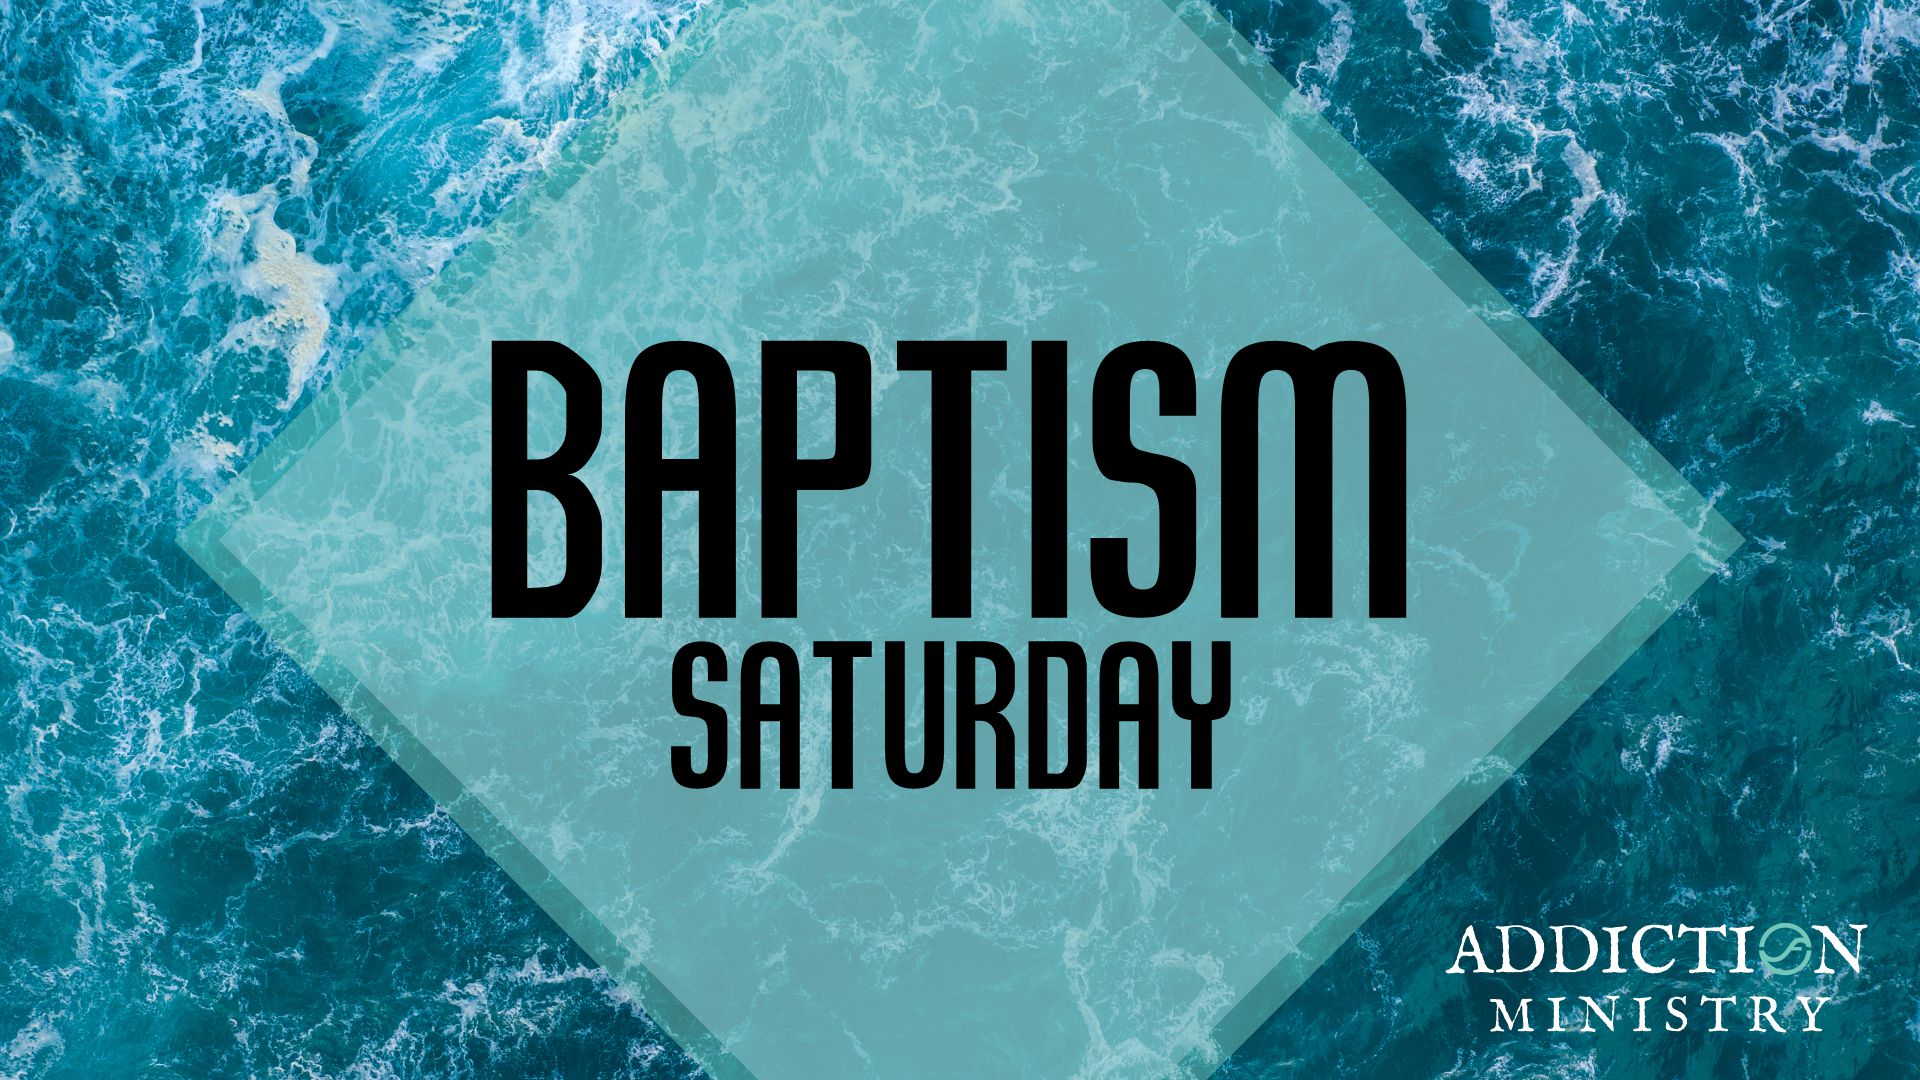 Overflow Addiction Ministry - Baptism